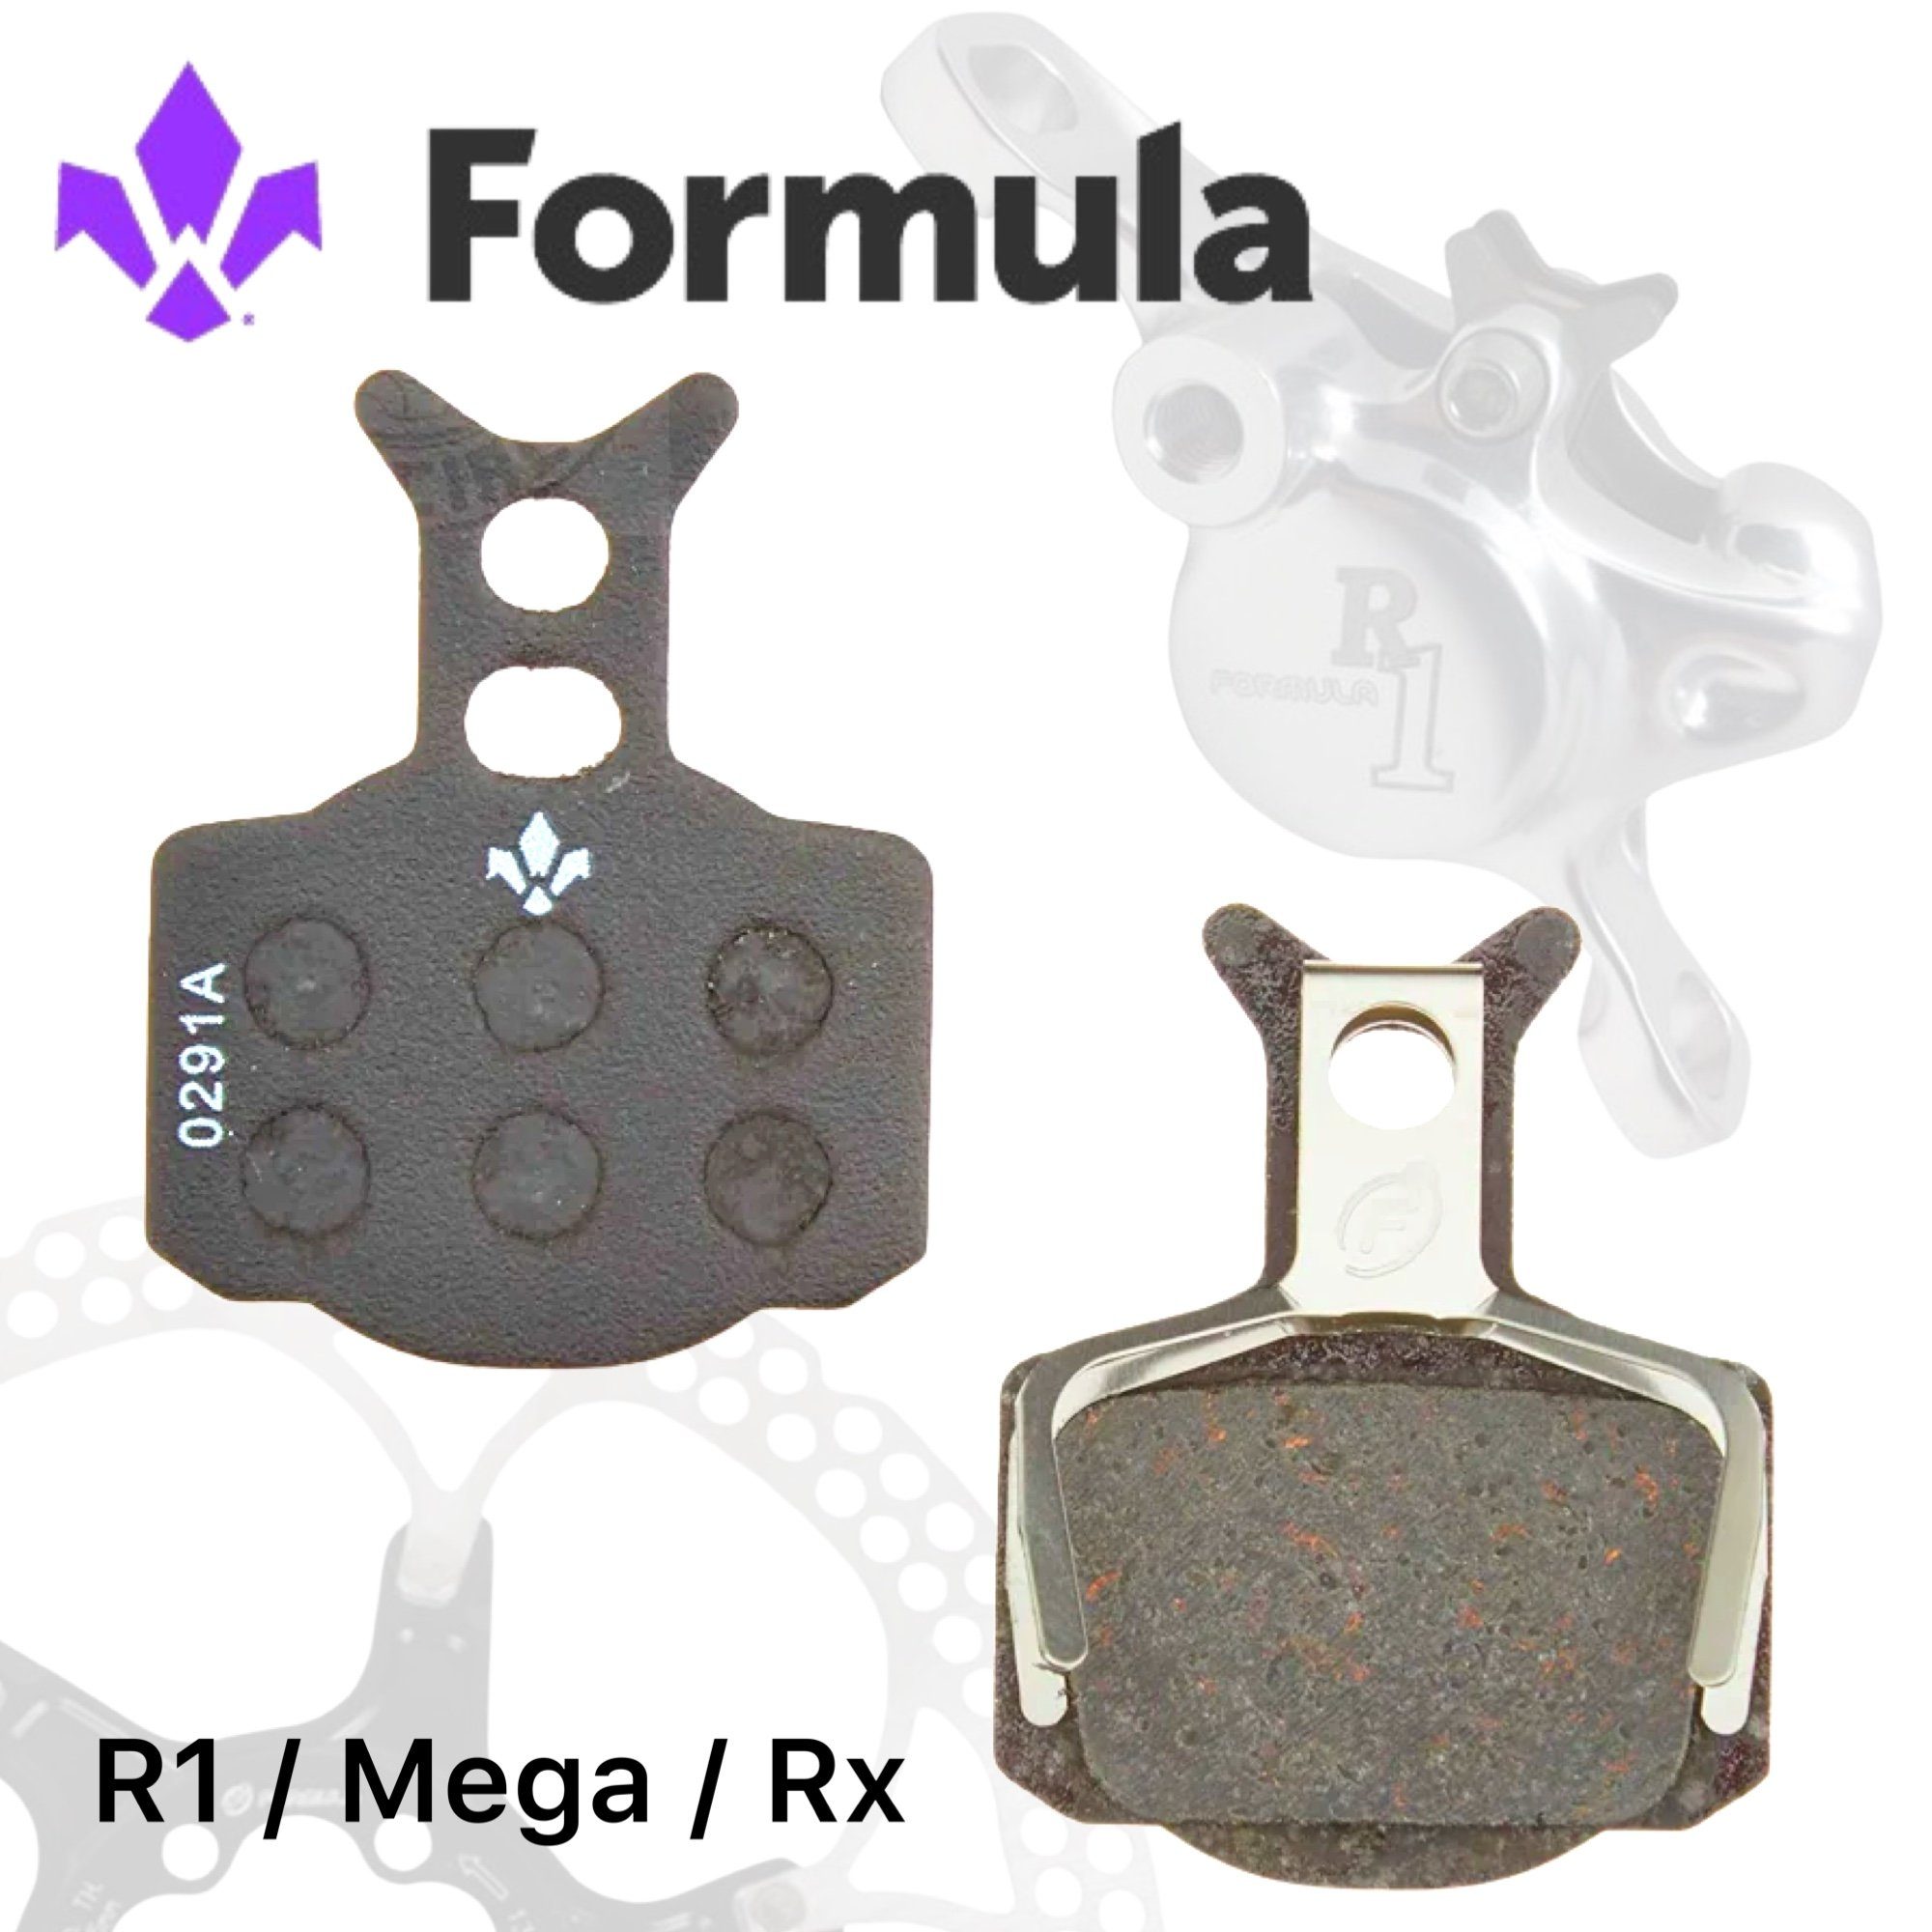 Formula Scheibenbremse Formula Scheibenbremsen Bremsbeläge RX / Mega R1 Kit organisch + Feder